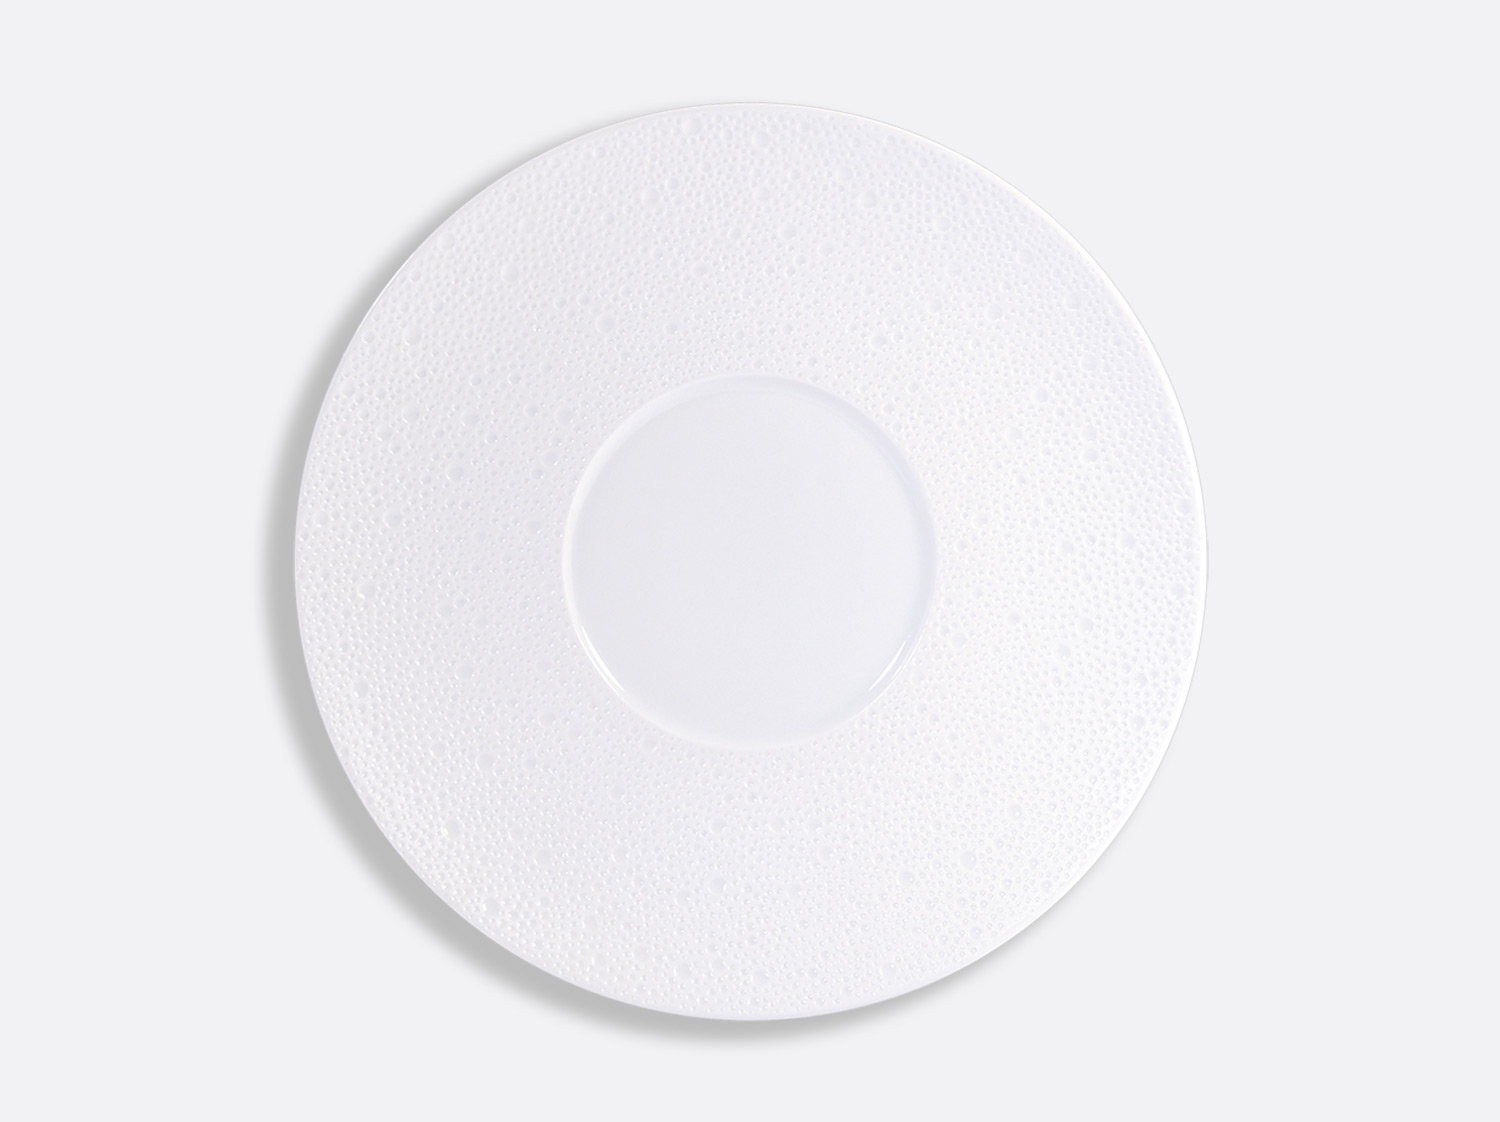 China Shogun plate 29.5 cm of the collection Ecume blanc aile mat | Bernardaud